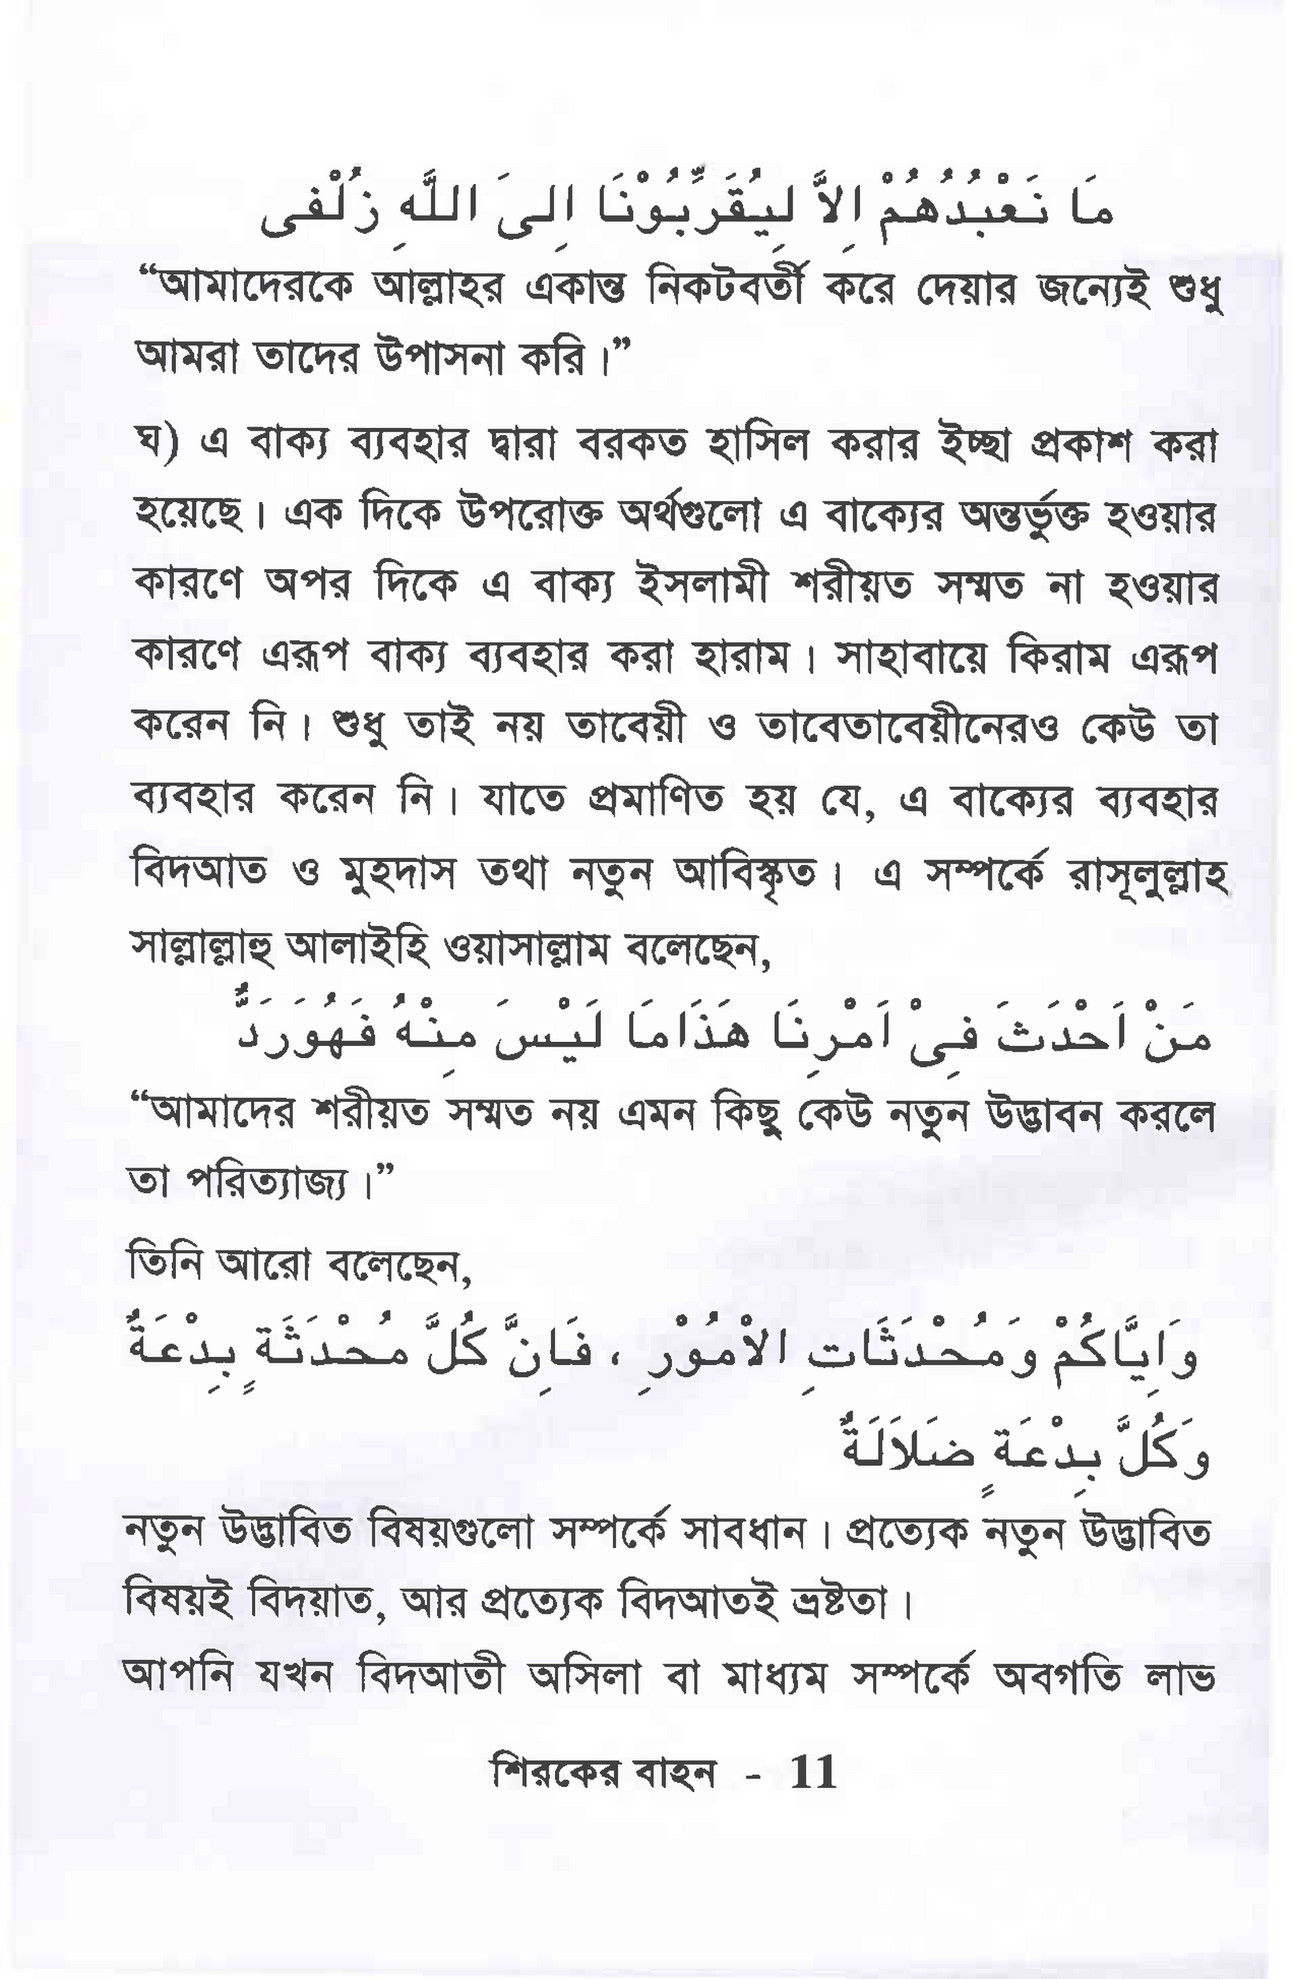 Bangla Meaning of Slide